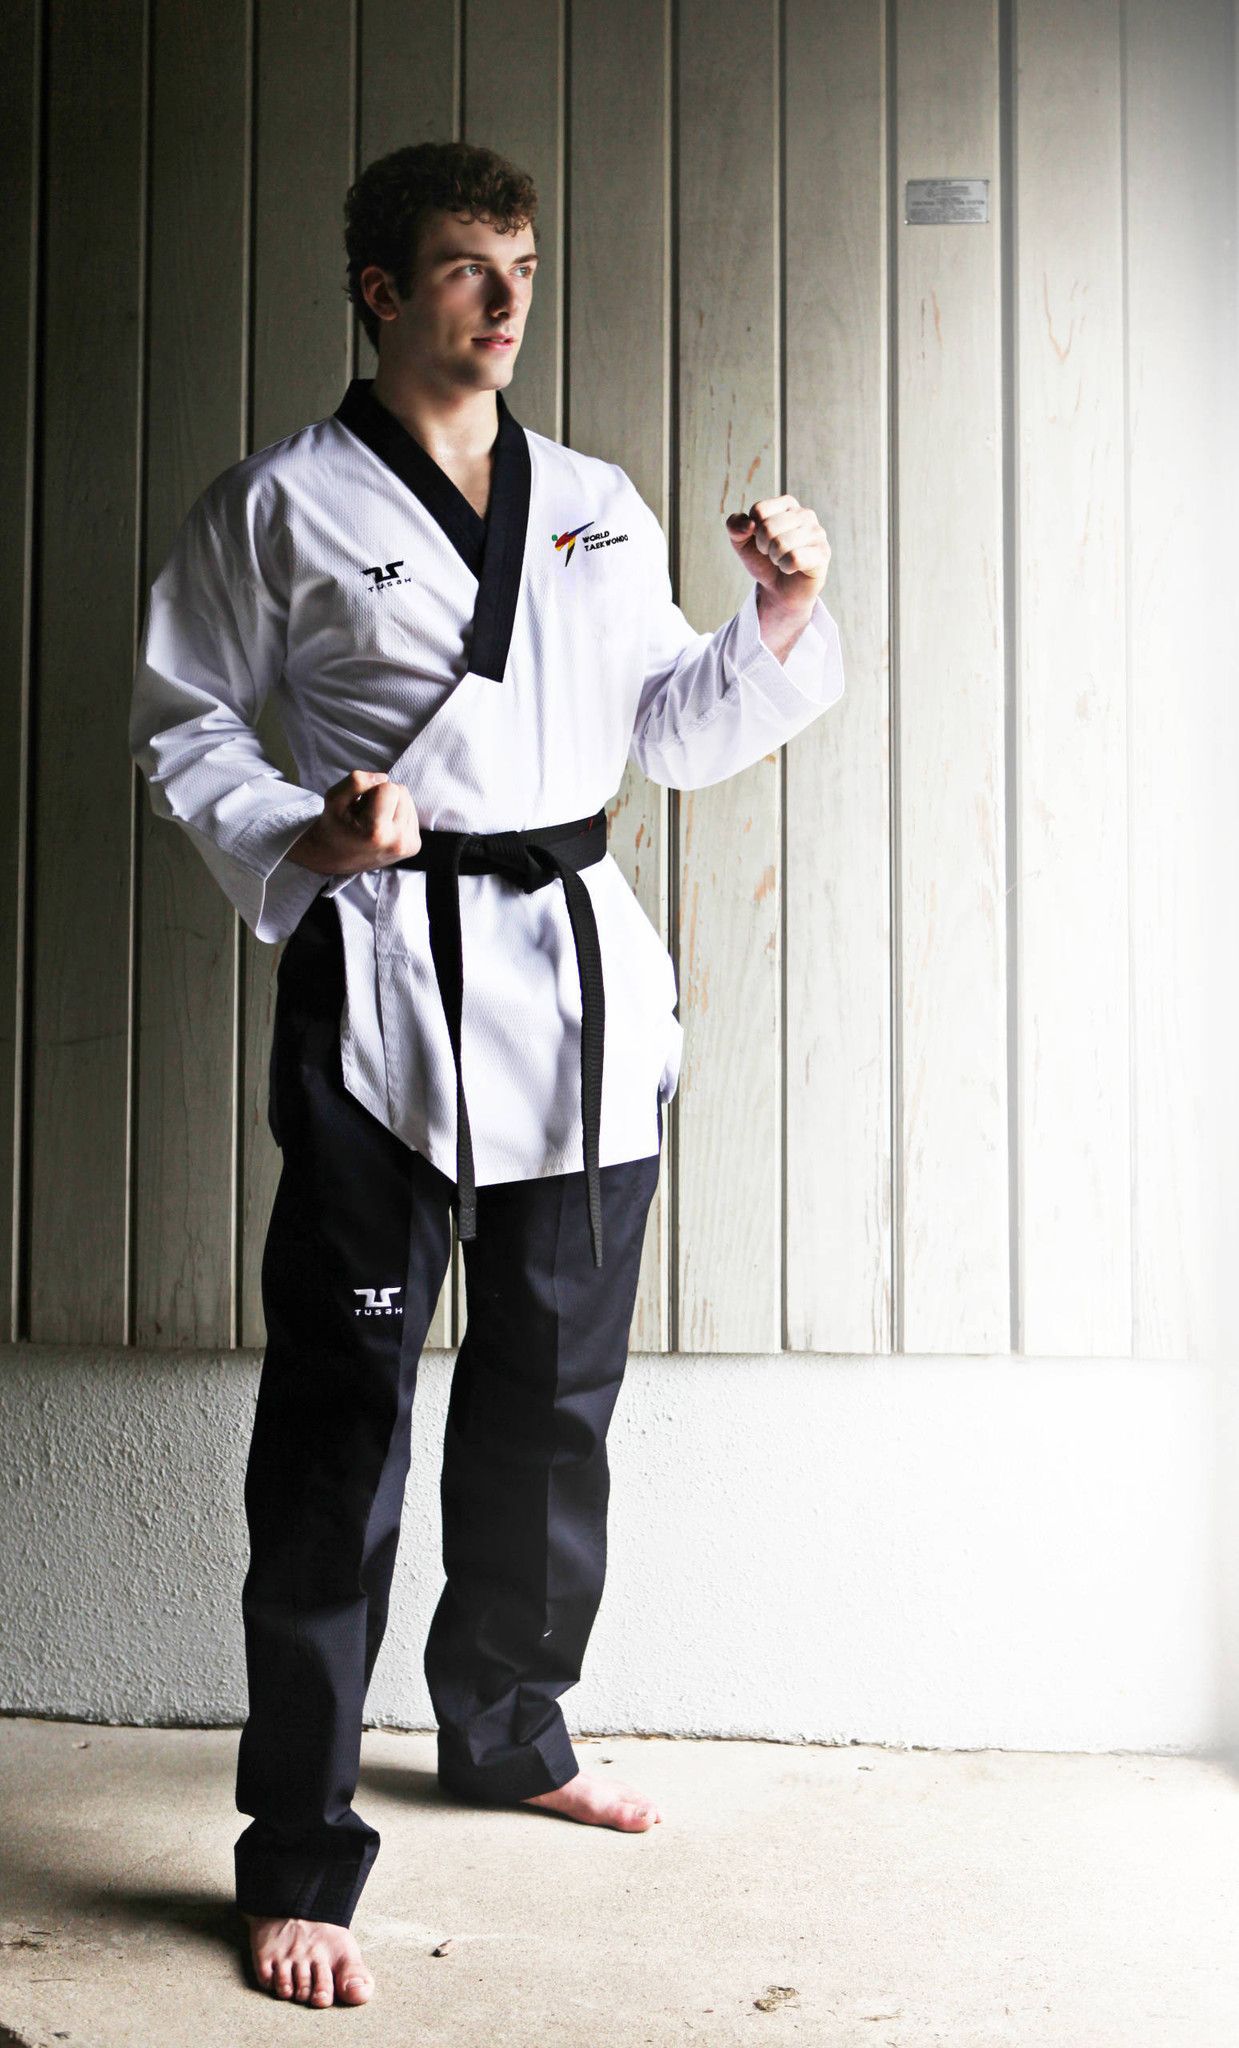 Poomsae Easyfit Dan Maschile Tusah per Taekwondo Omologato WT per forme e competizioni